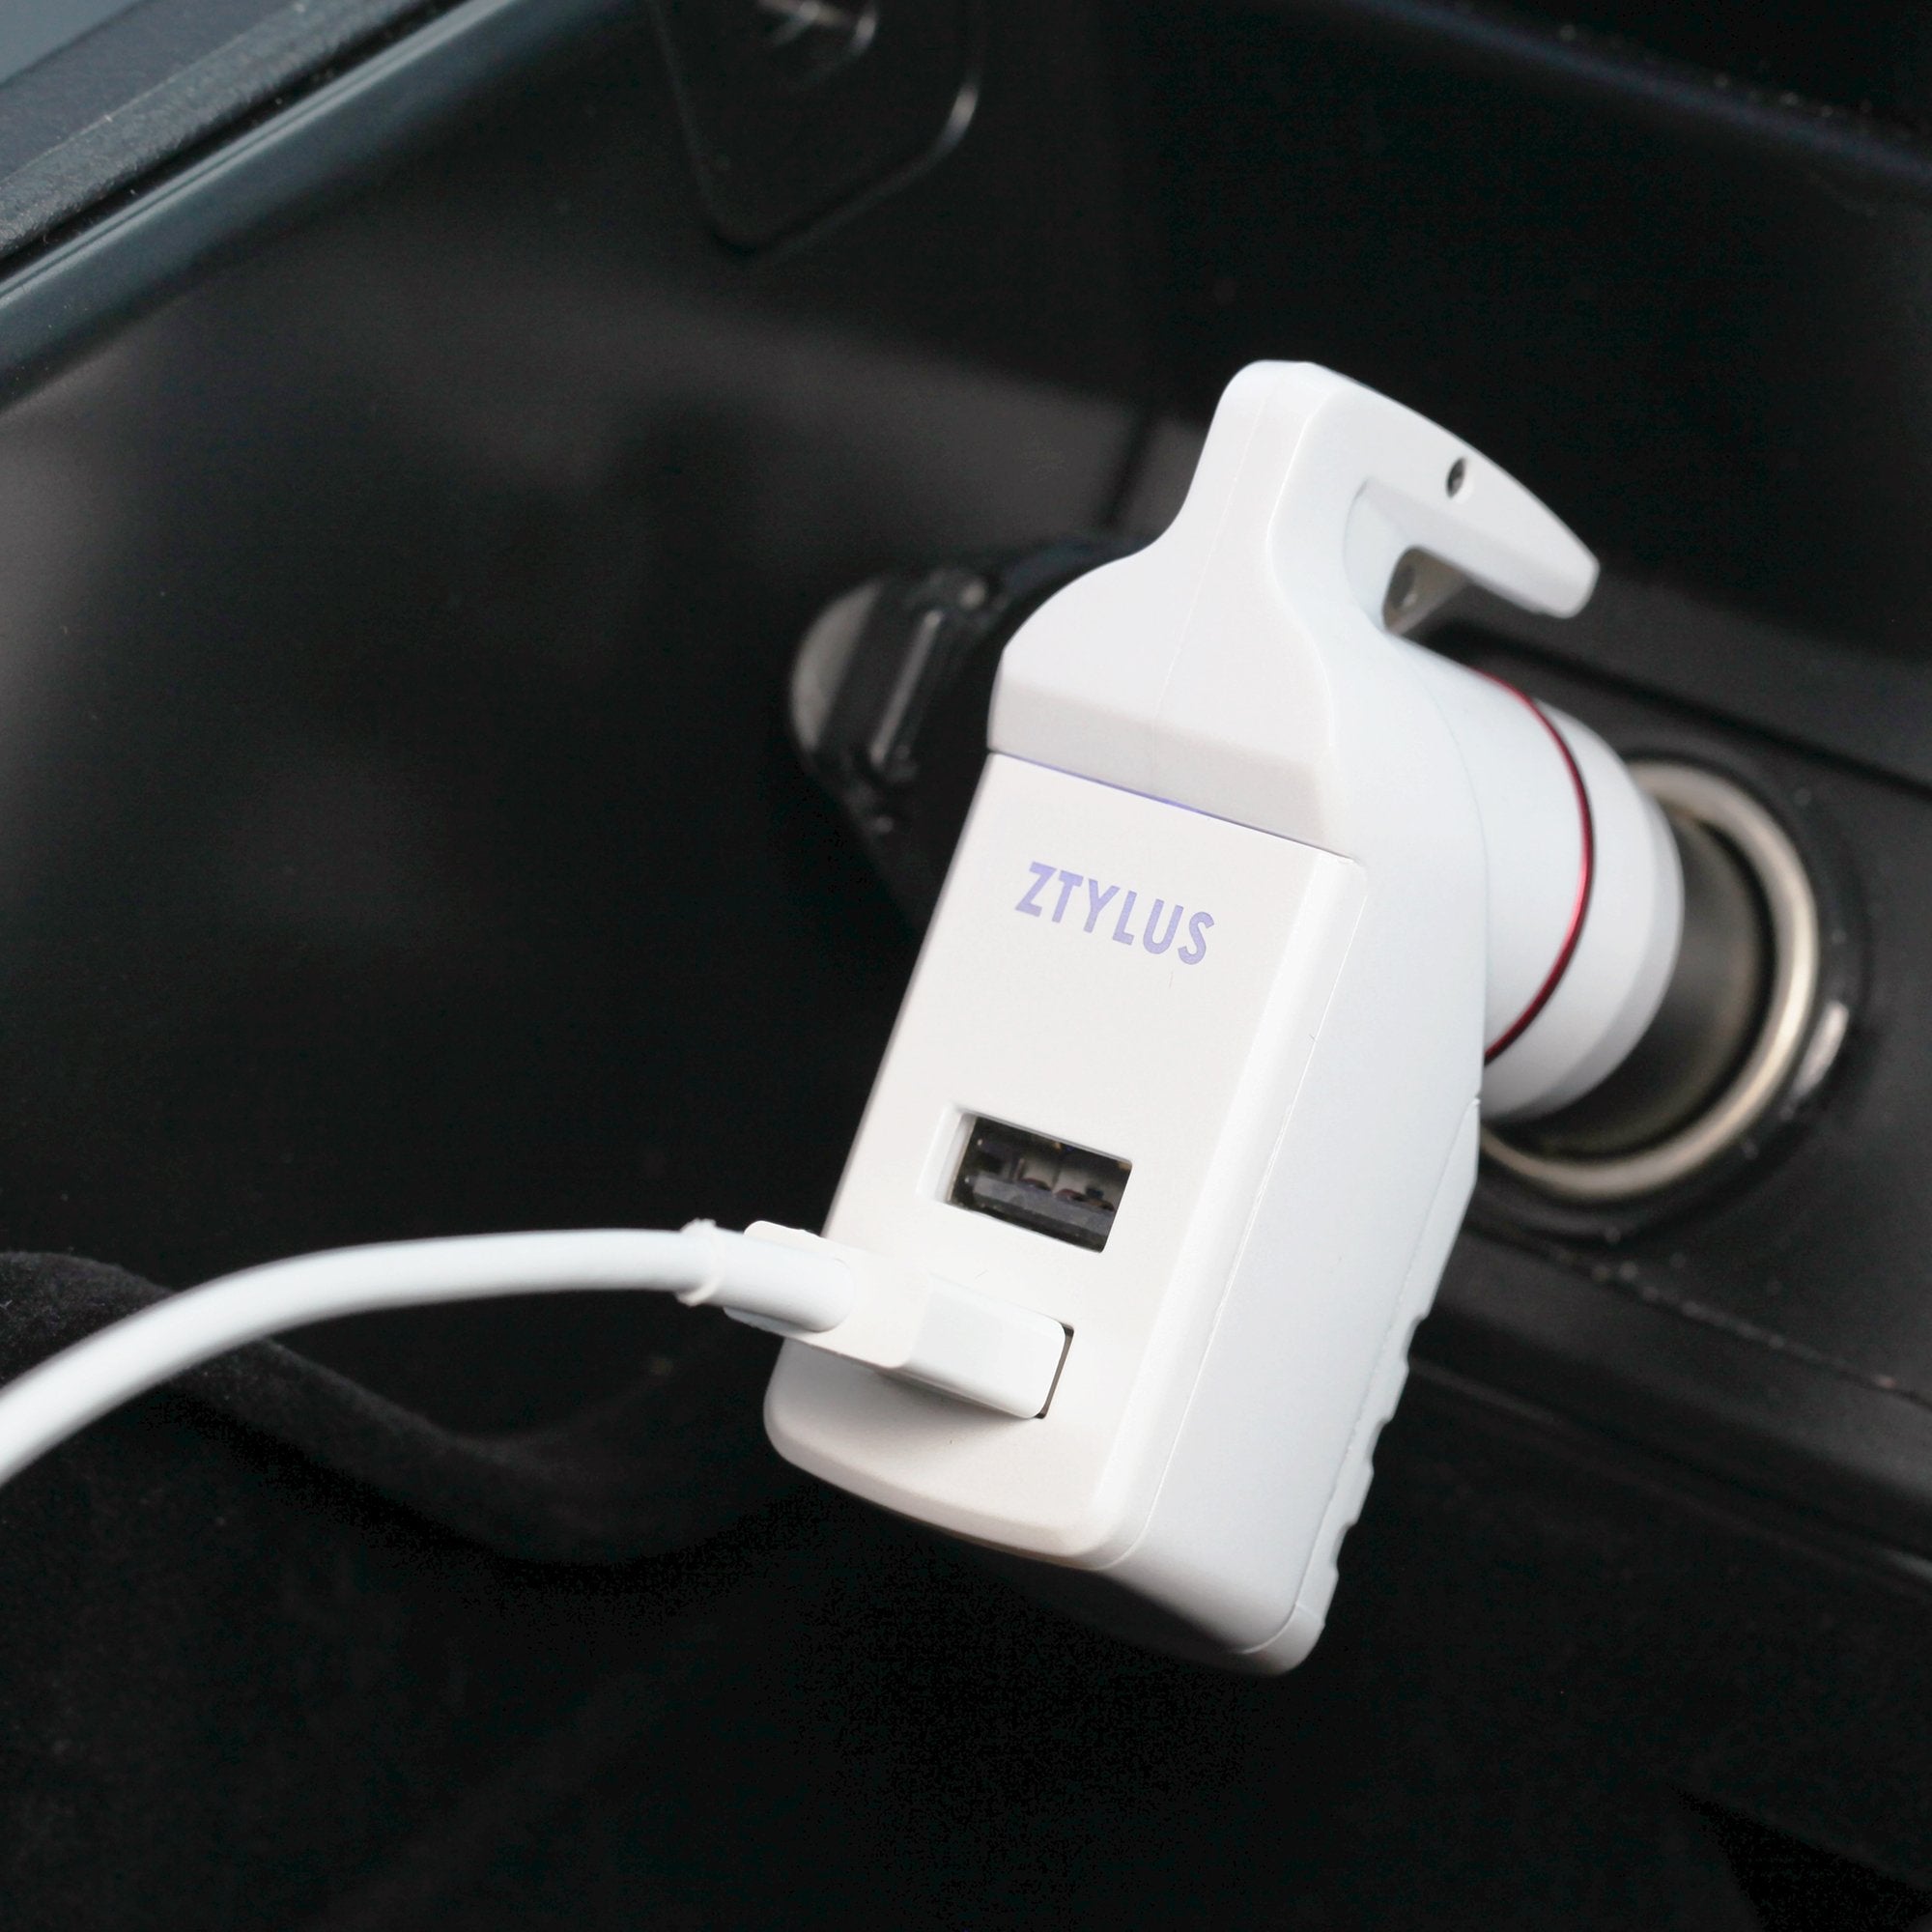 USB Car Charger Emergency Tool, Seatbelt Cutter, Car Window Breaker